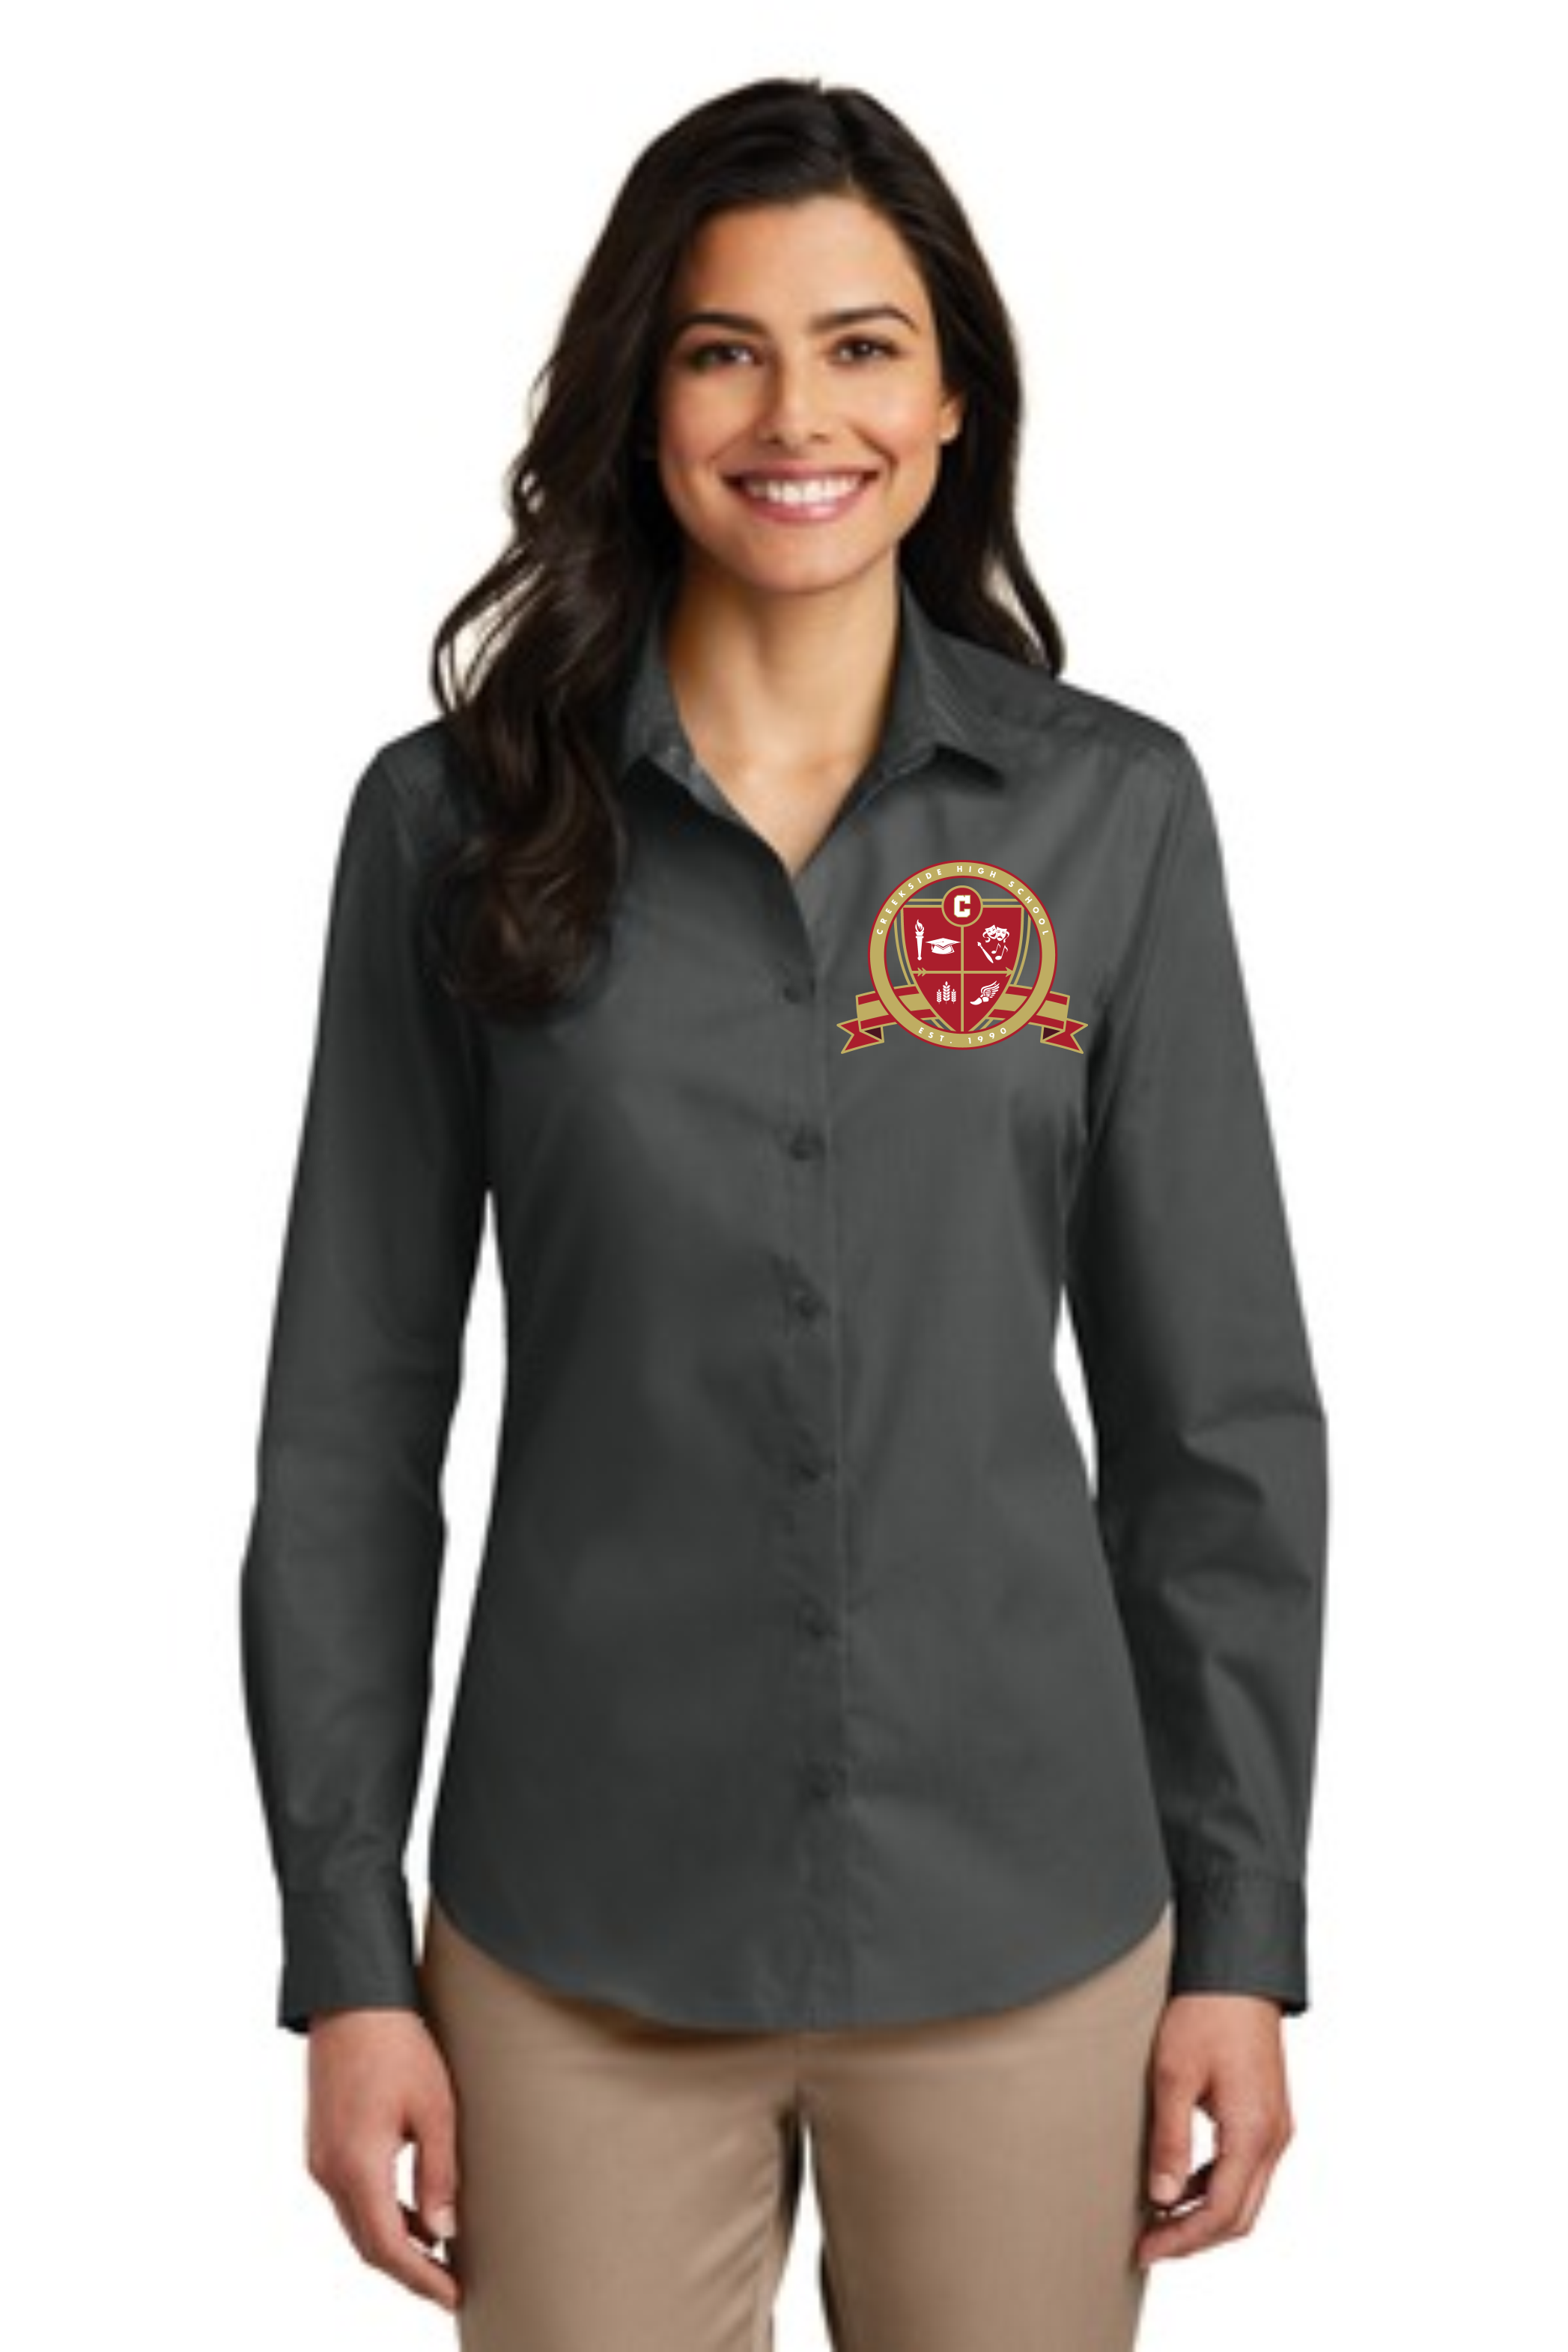 CR - Long sleeve care free Ladies Poplin shirt - style LW100